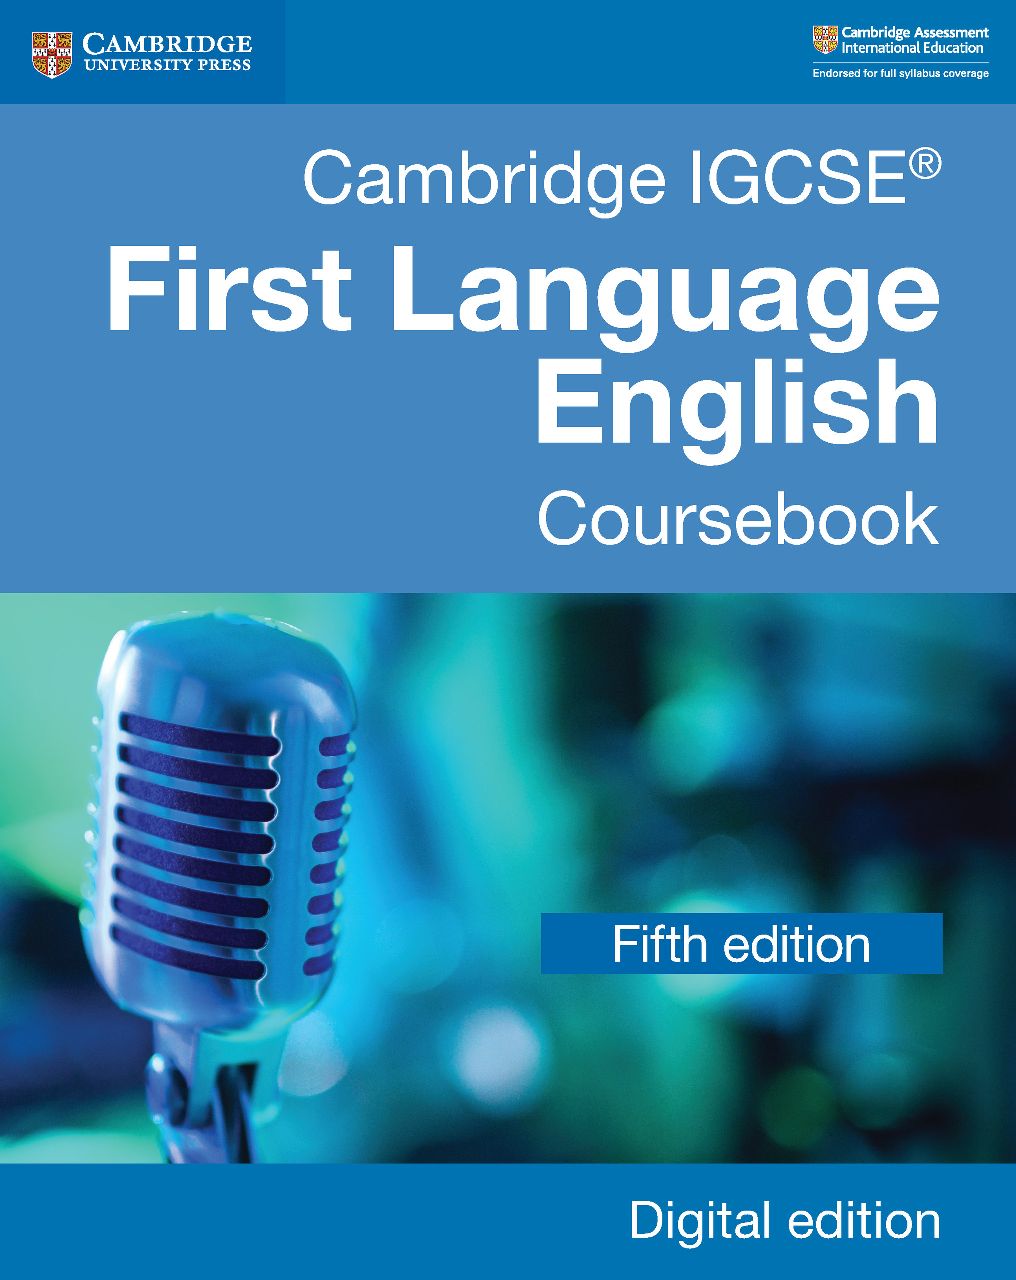 [PDF/ePub] Cambridge IGCSE® First Language English Coursebook Digital Edition